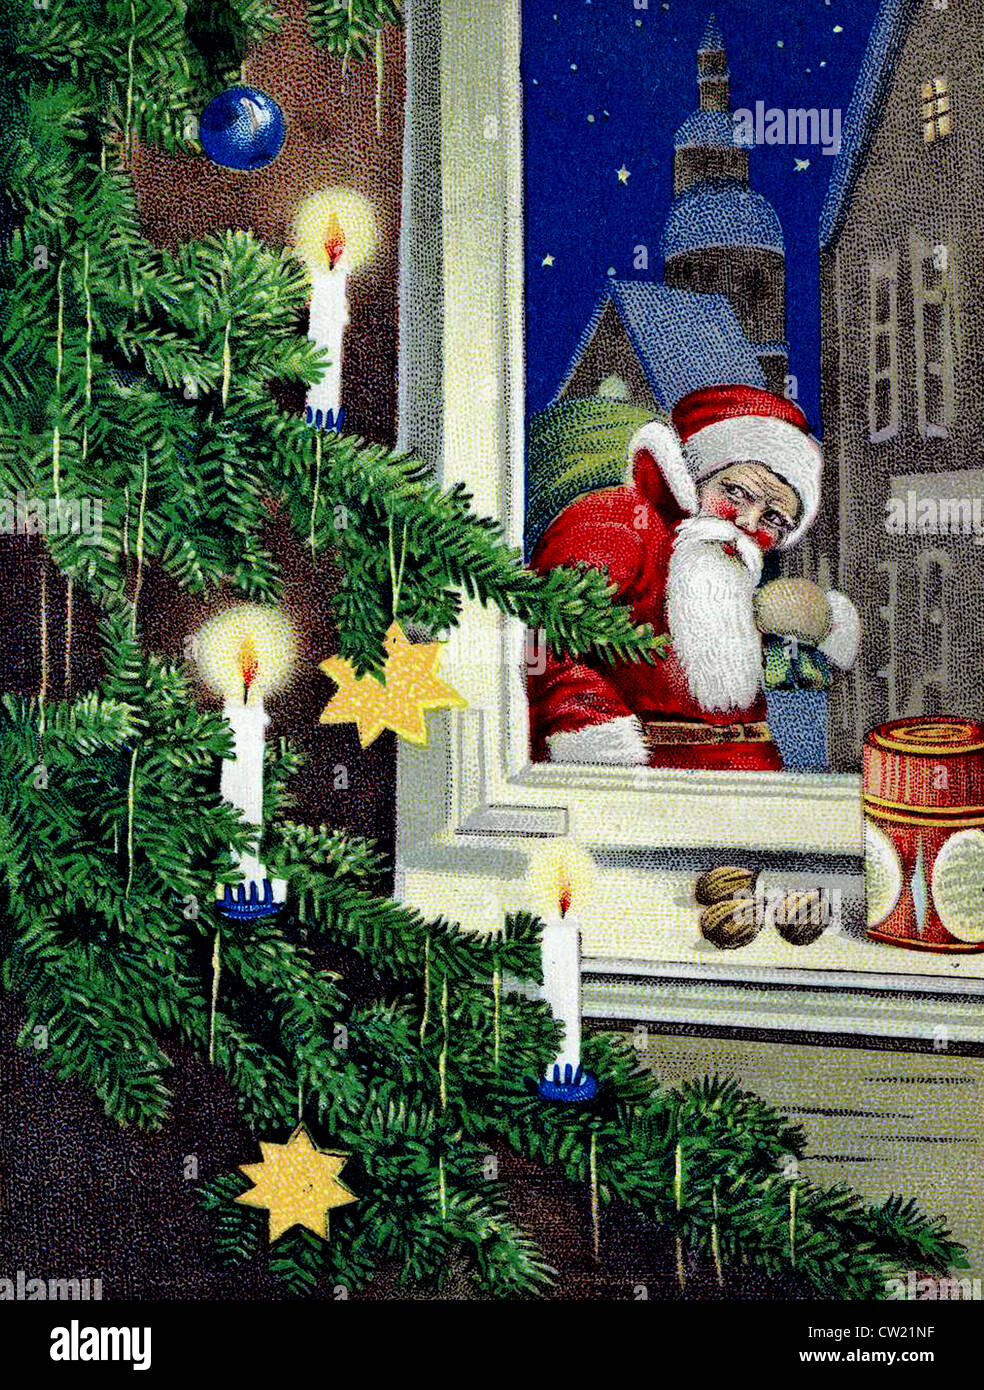 Santa Claus looks through a window Stock Photo